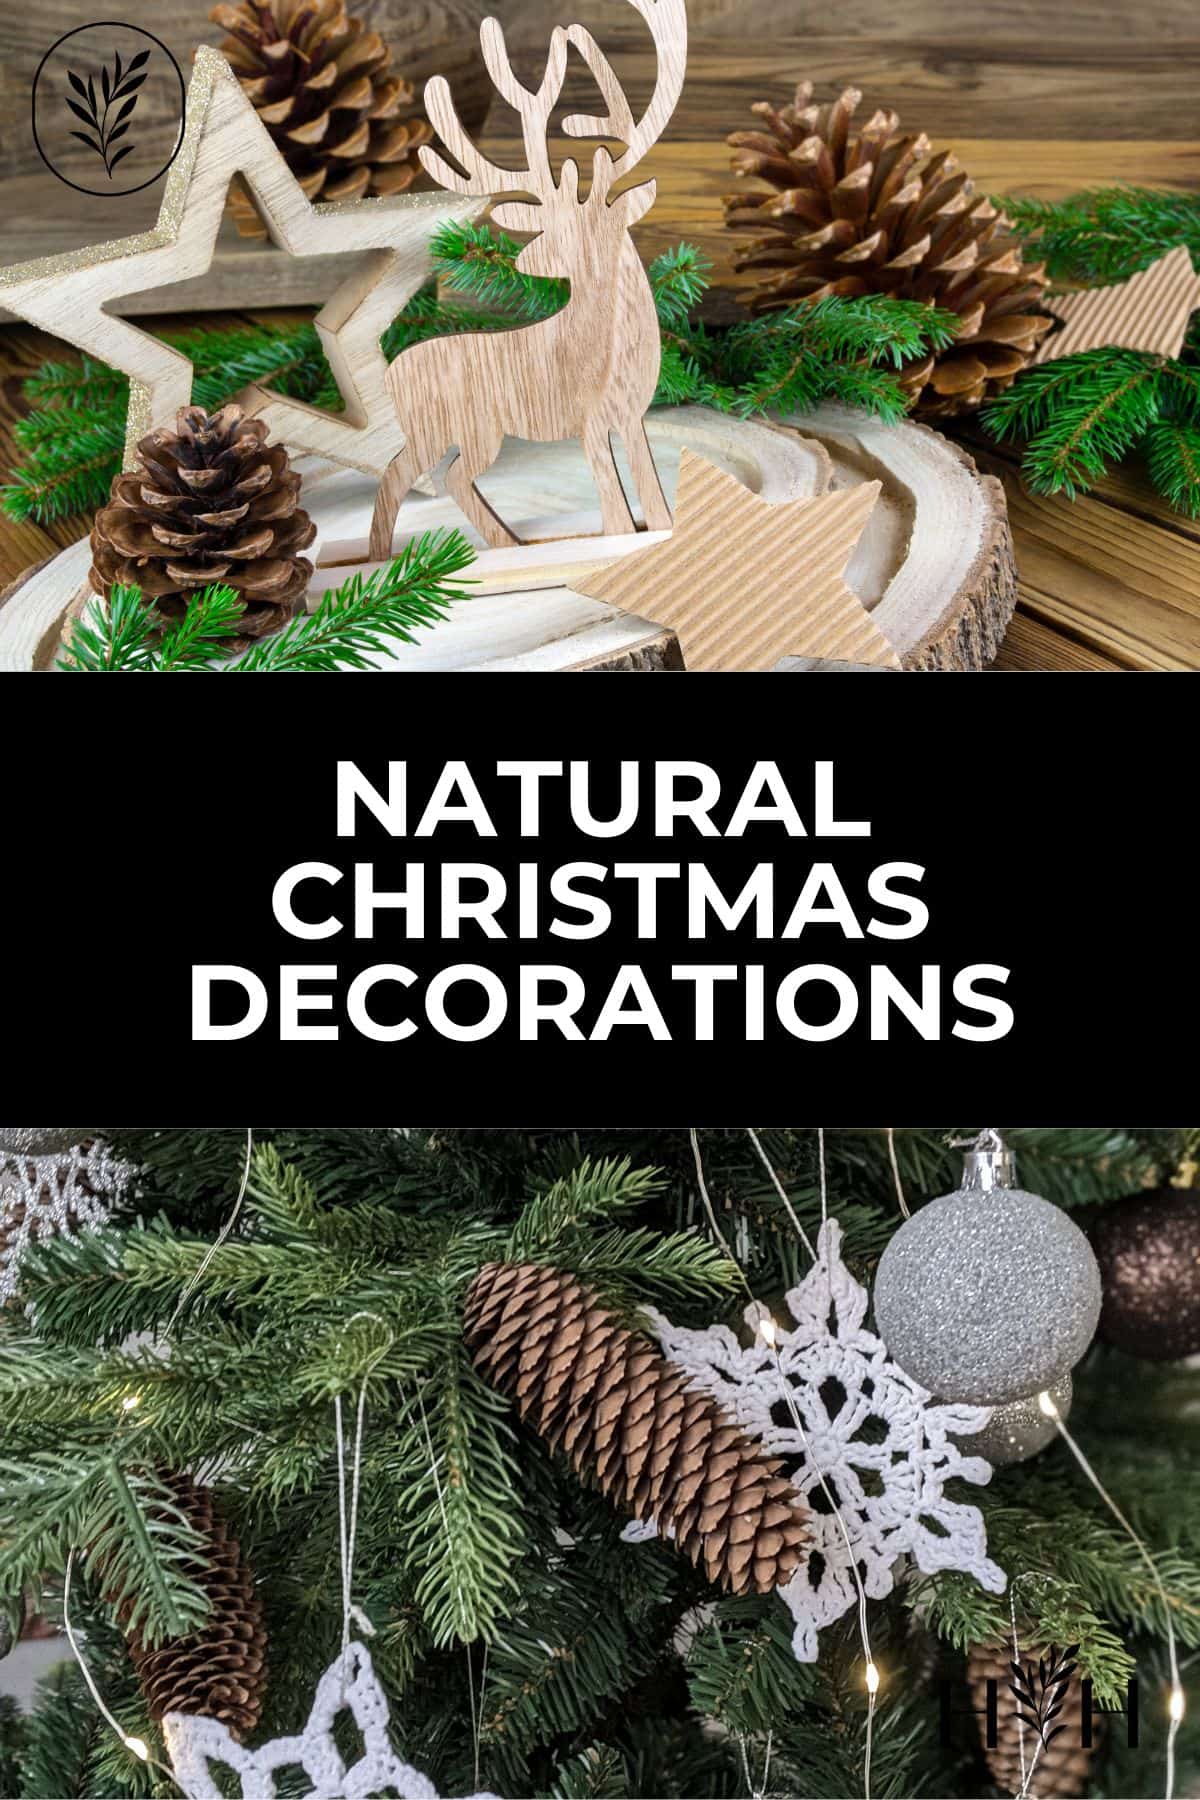 Natural christmas decorations via @home4theharvest